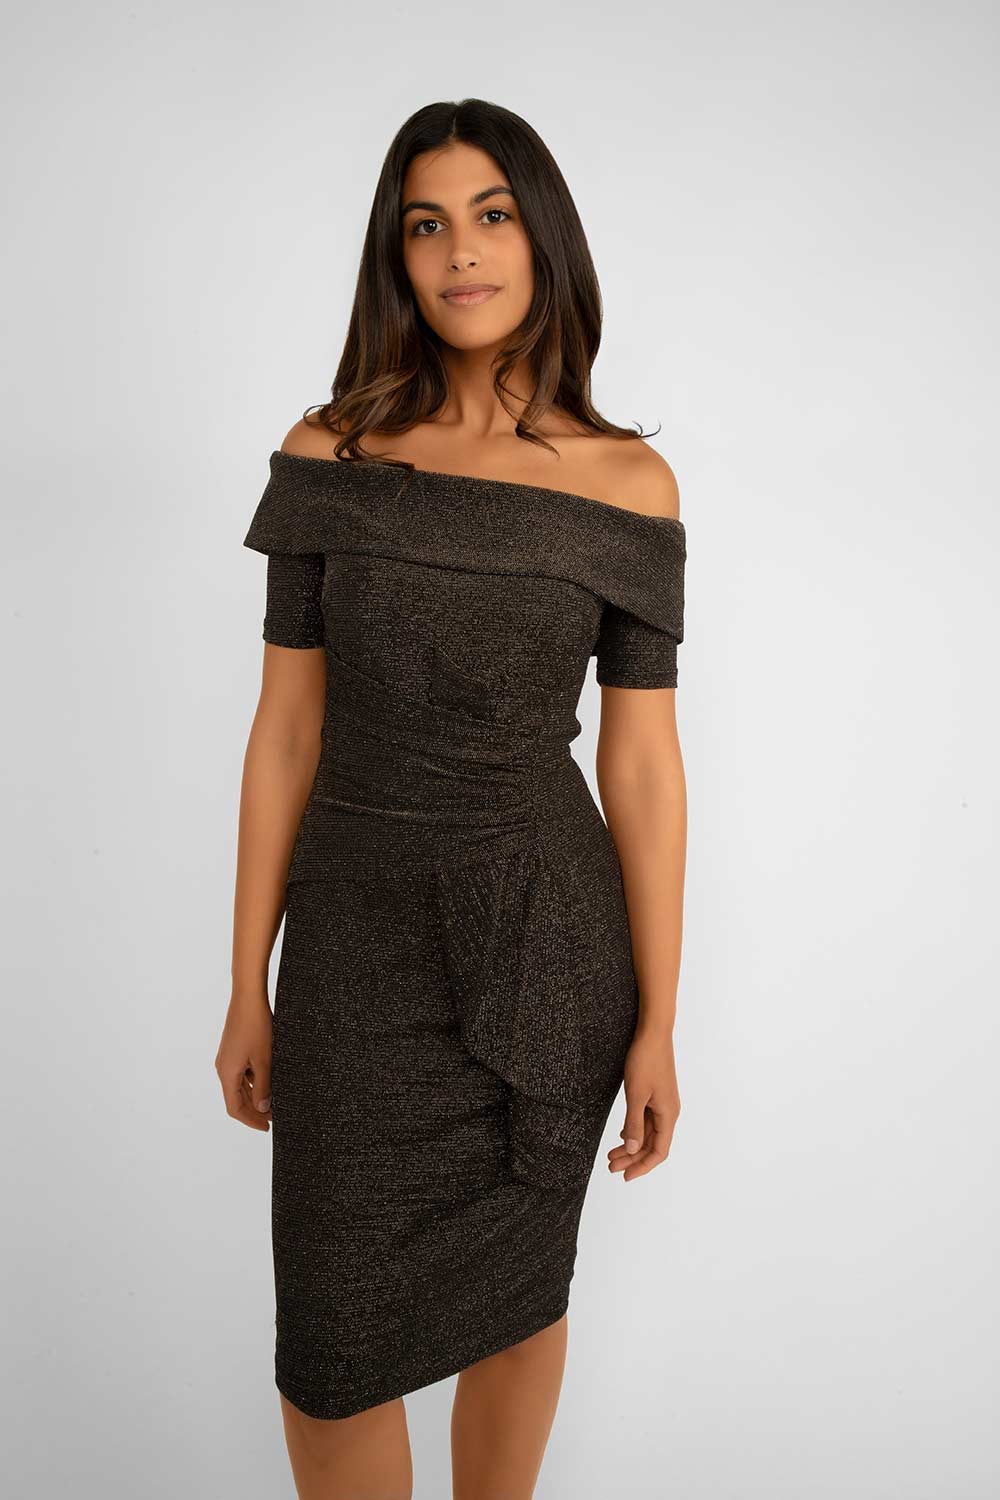 Women's Clothing FRANK LYMAN (234303) Off The Shoulder Sparkle Dress in BLACK